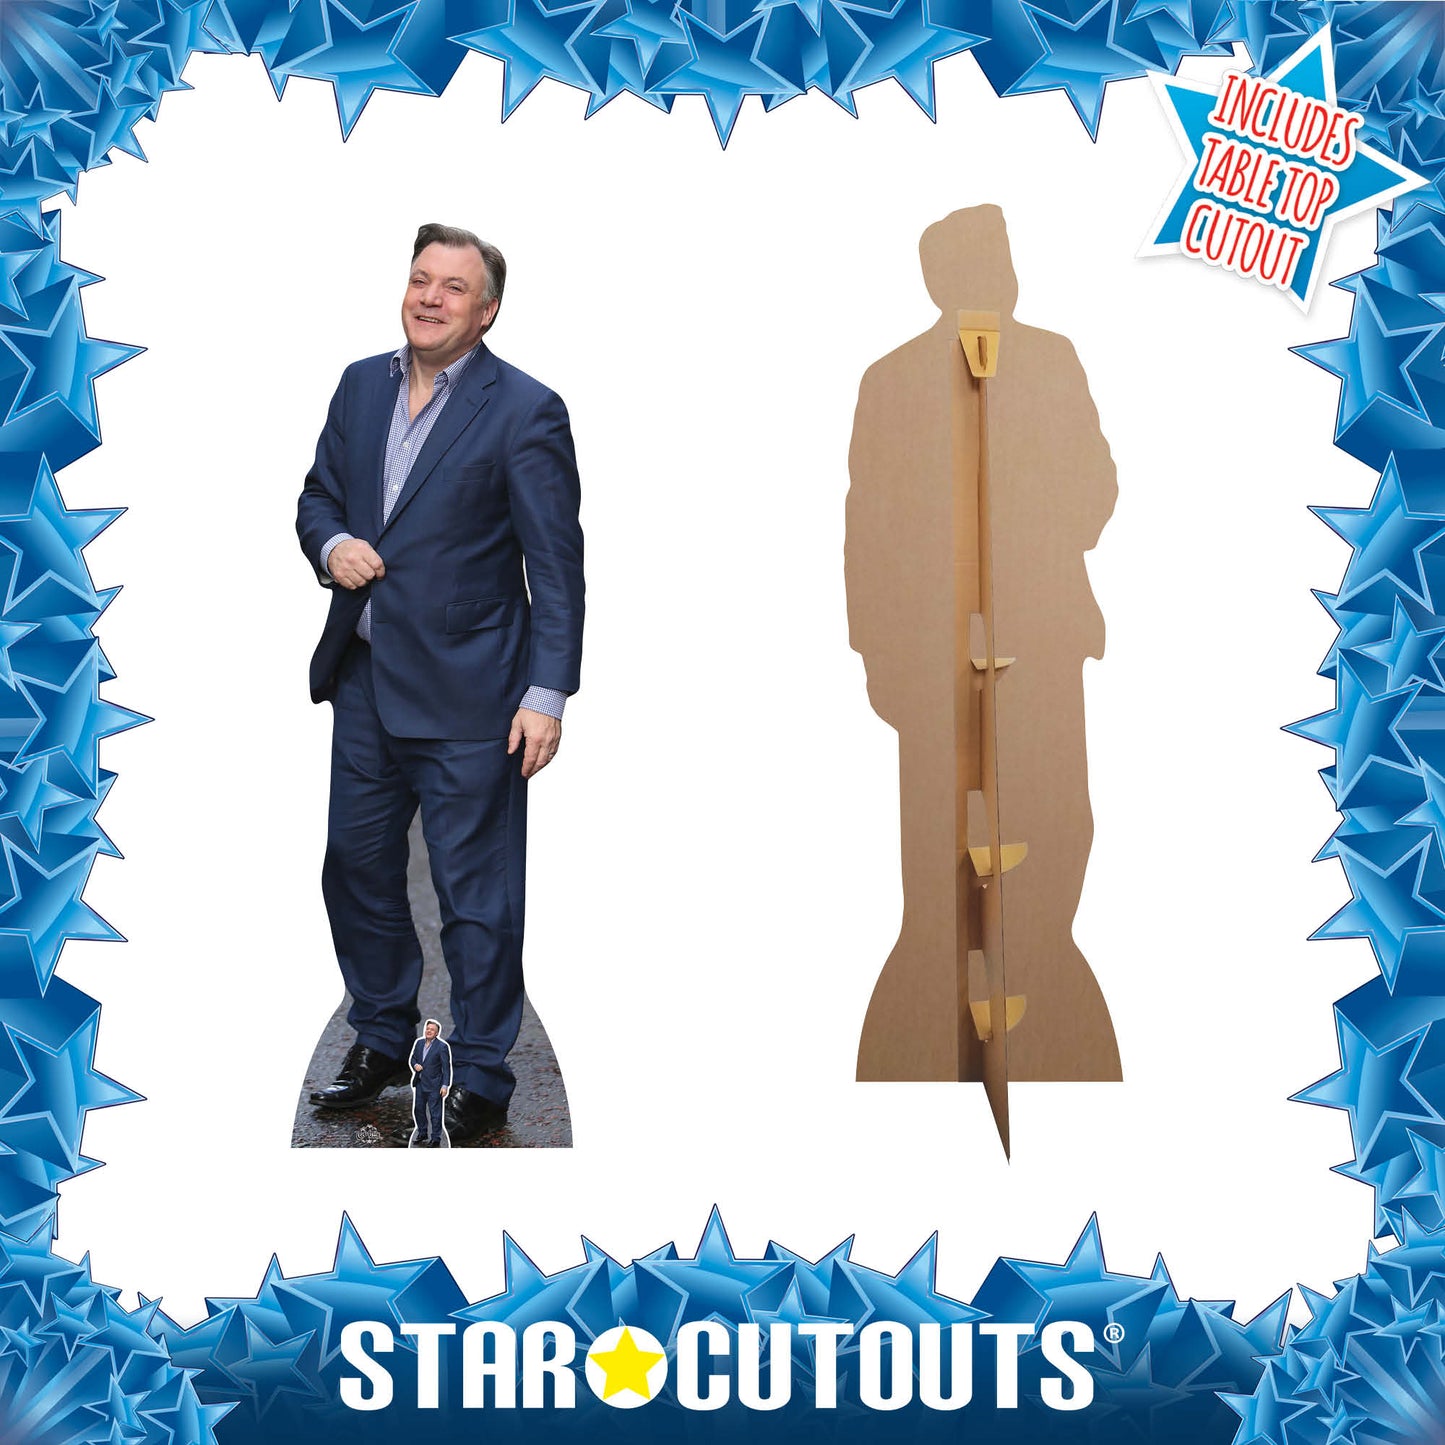 Ed Balls Cardboard Cutout Politician